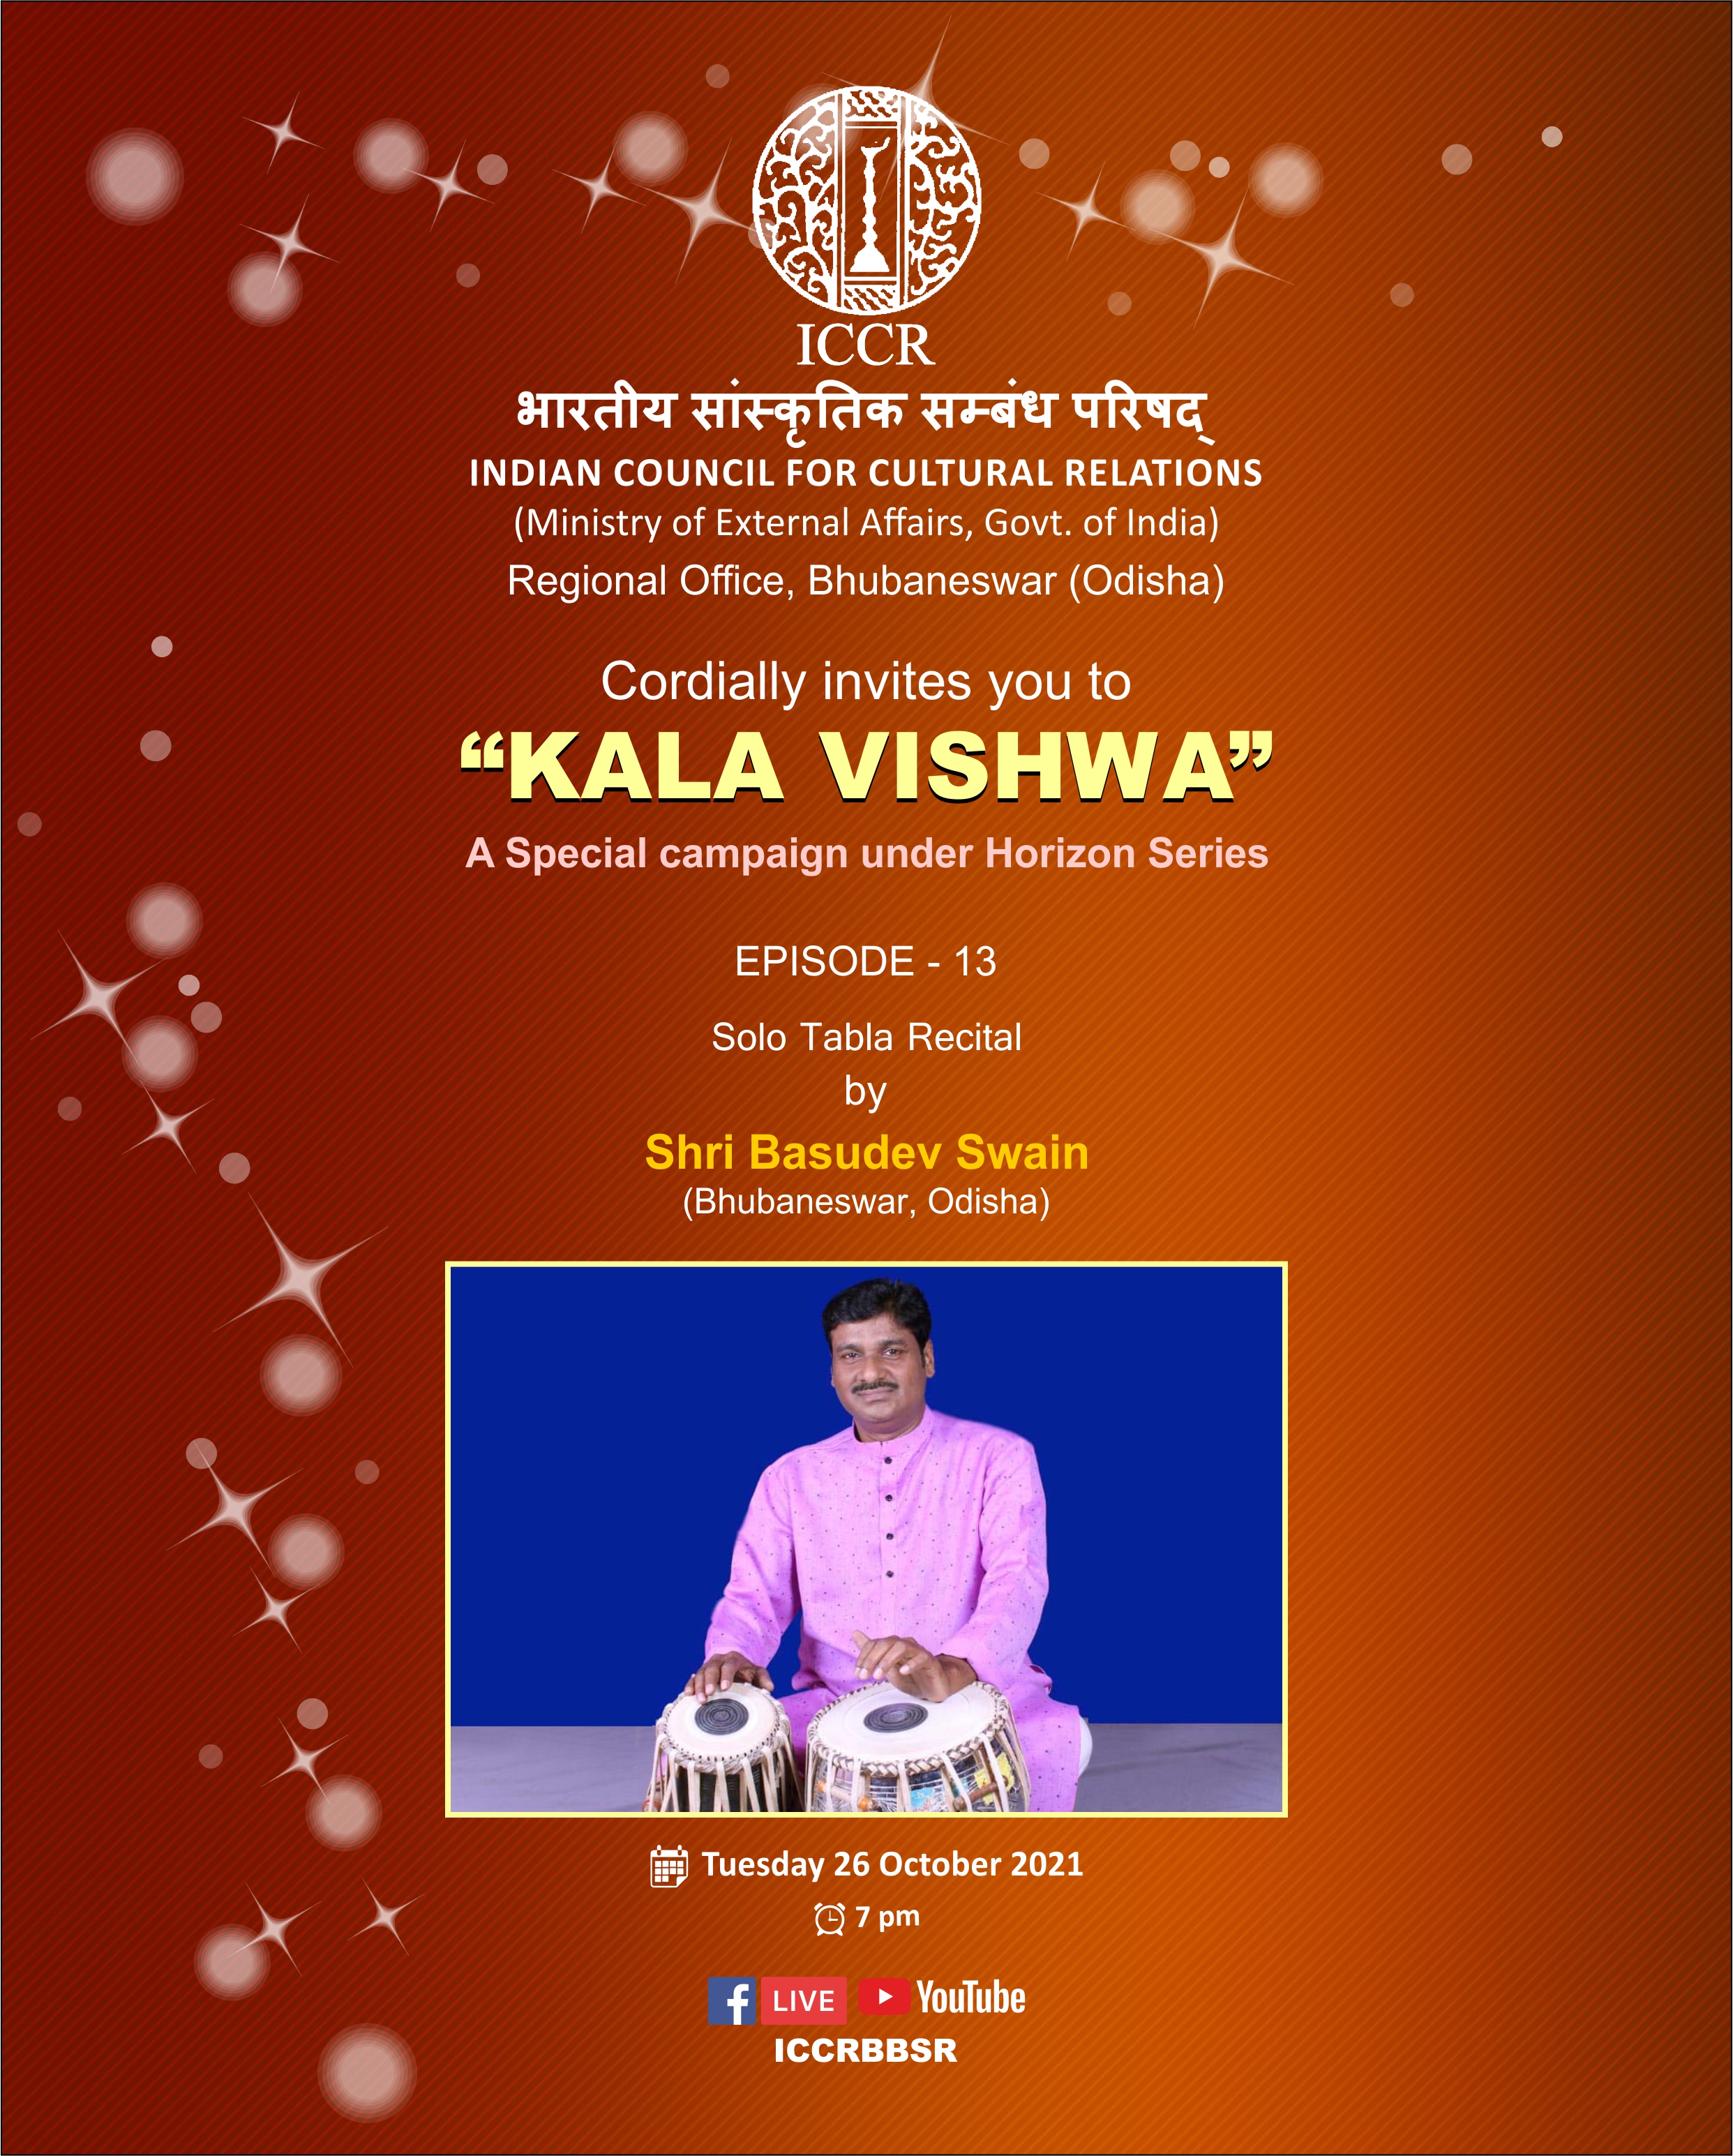 ICCR Regional Office, Bhubaneswar (Odisha) cordially invites you to the Episode 13 of KALA VISHWA : A Special campaign under Horizon Series - Solo Tabla Recital by Shri Basudev Swain, Bhubaneswar Tuesday, 26 October 2021 at 7:00 pm